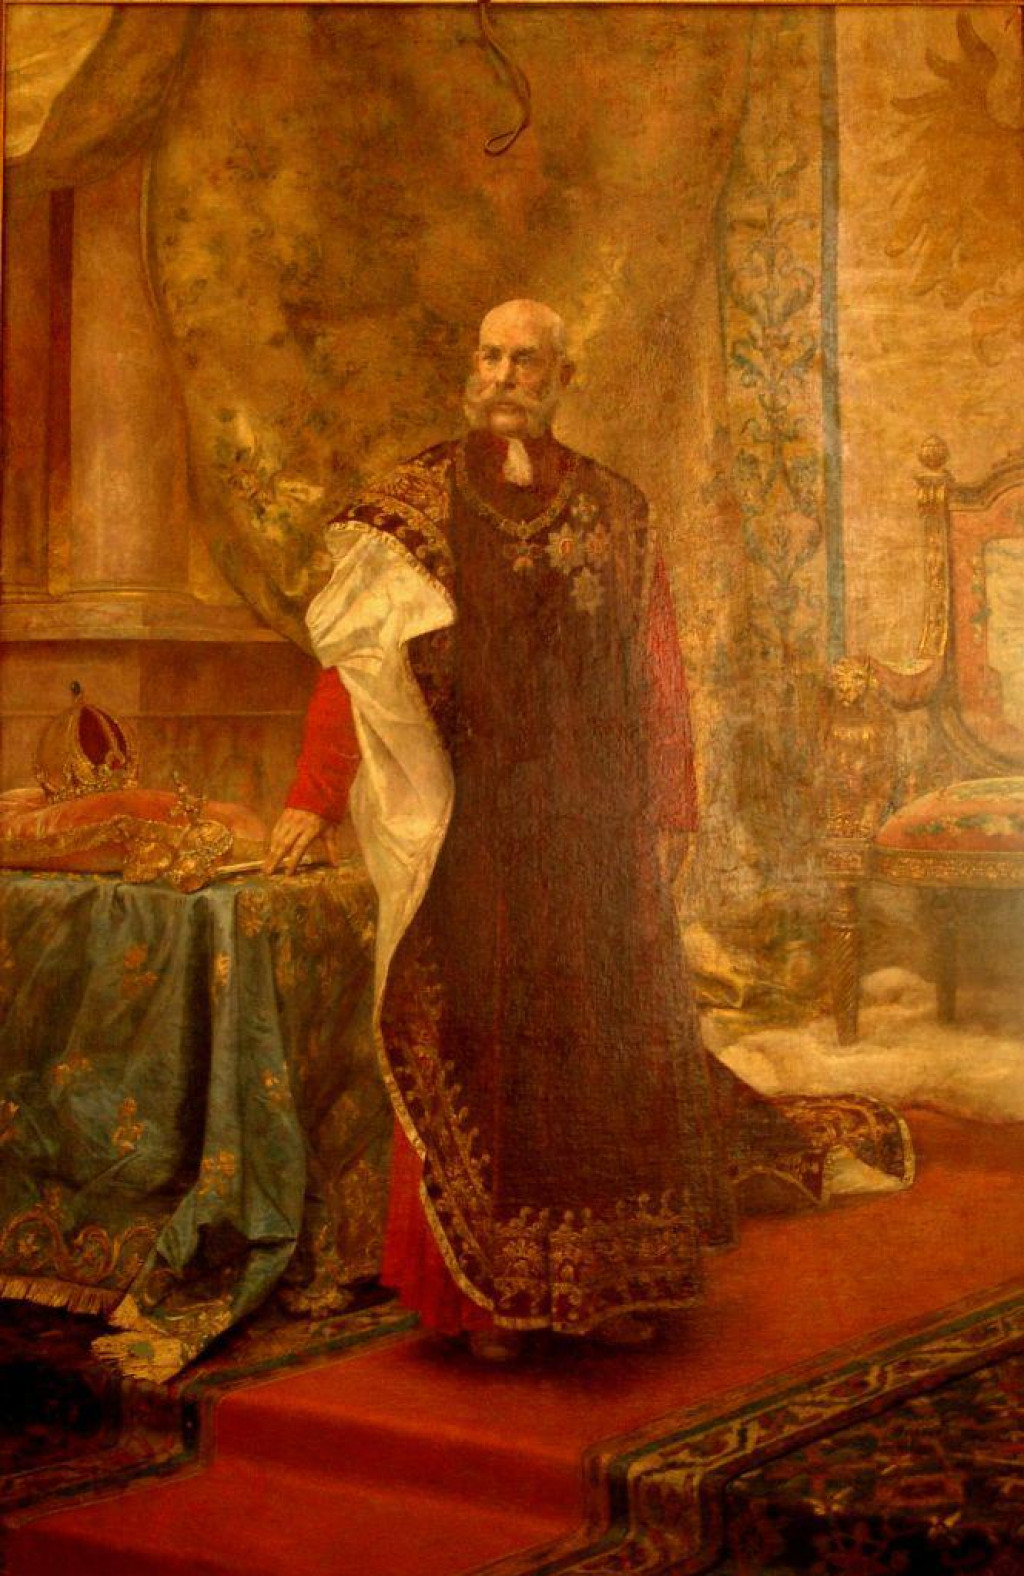 &lt;p&gt;Vlaho Bukovac, Portret cara Franje Josipa iz Dalmatinskog sabora u Zadru 1896.&lt;/p&gt;
